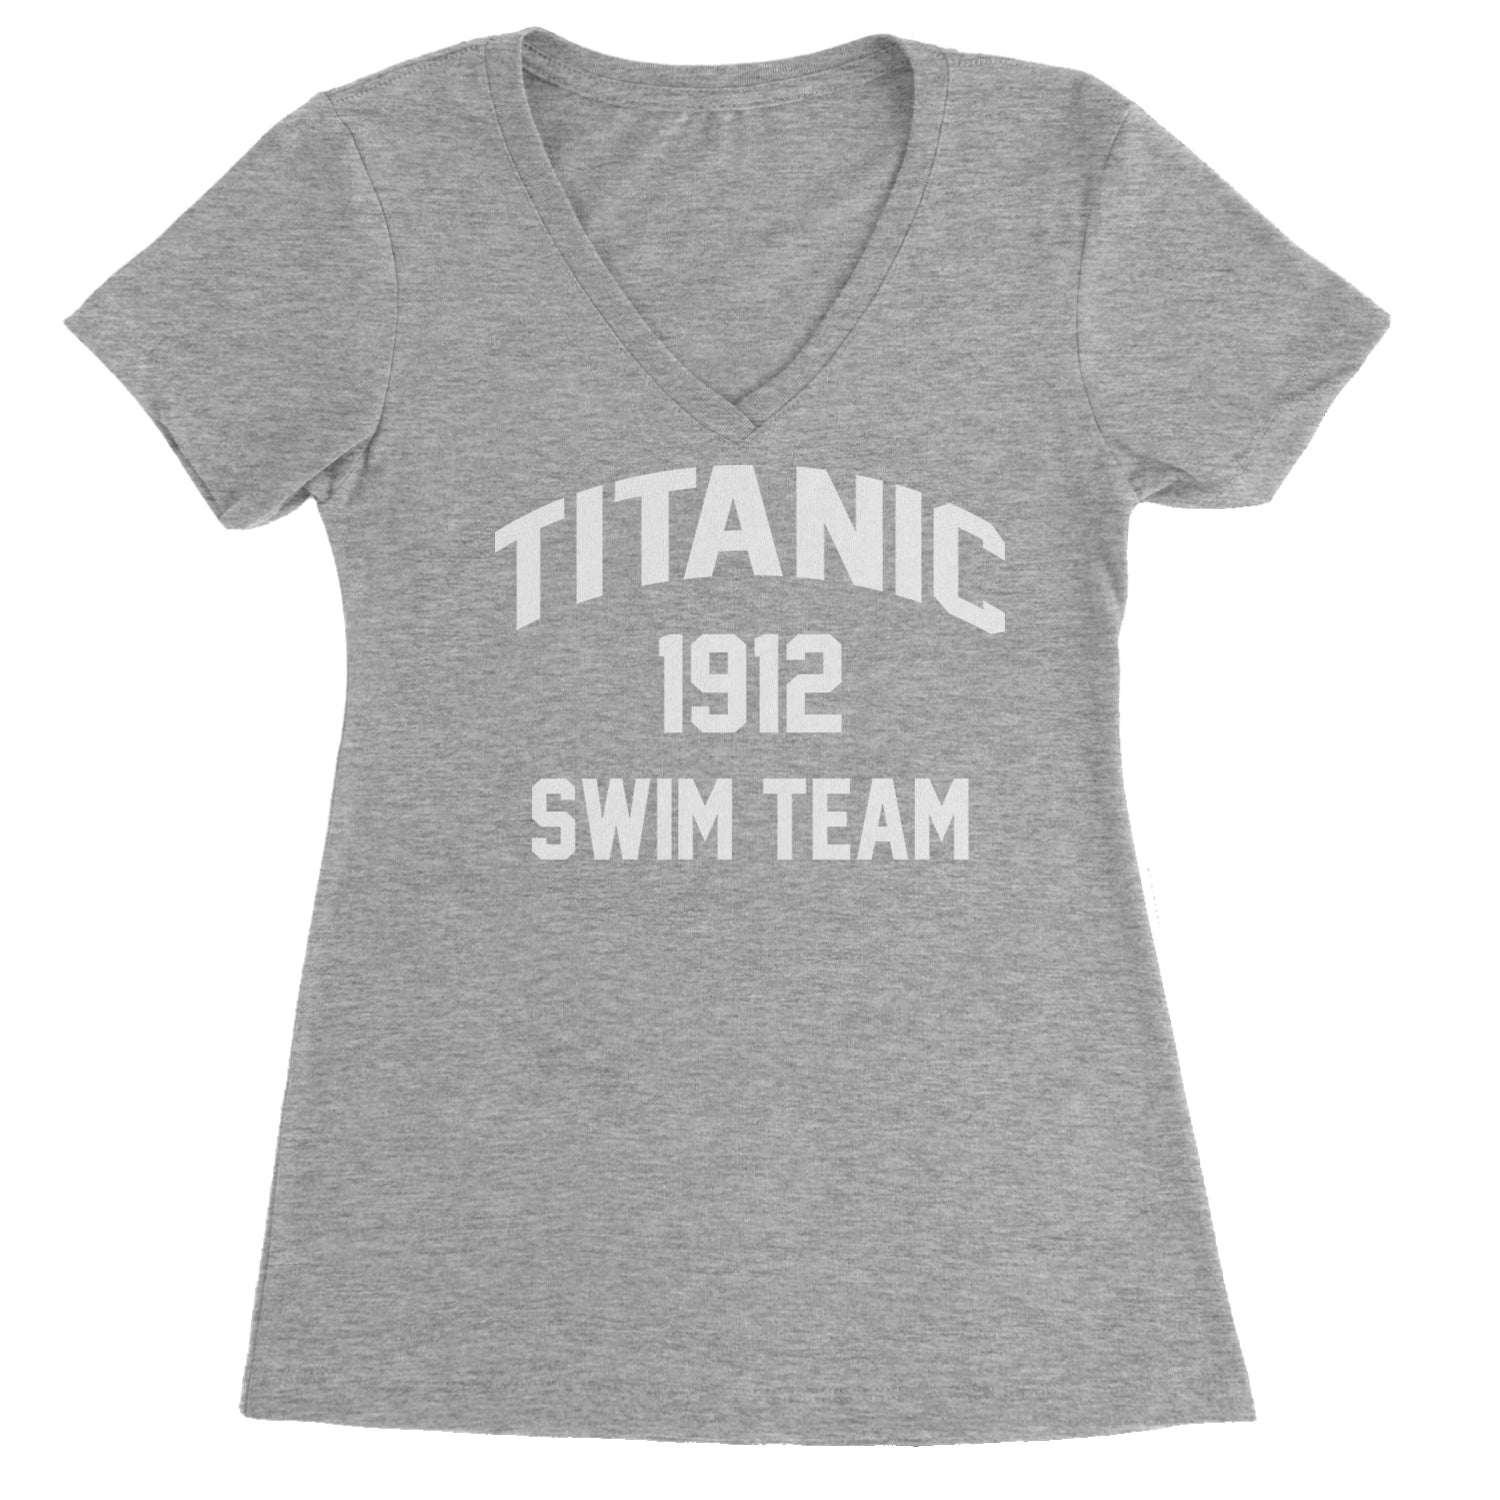 Titanic Swim Team 1912 Funny Cruise Ladies V-Neck T-shirt Heather Grey